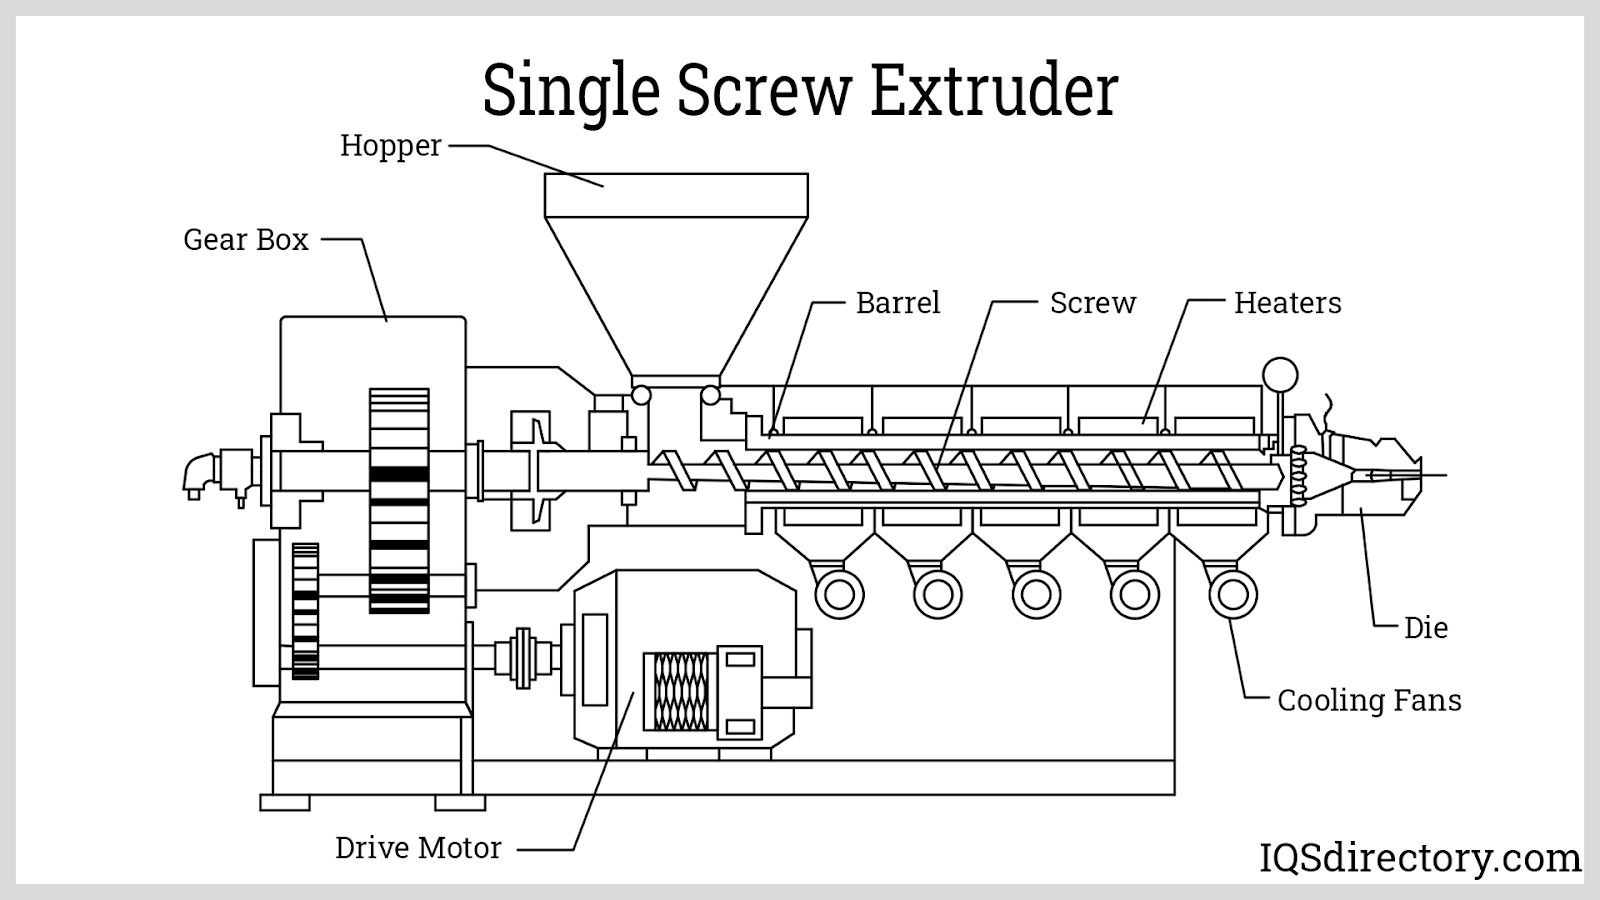 Polymer Extrusion - Single Screw Extruder vs. Twin Screw Extruder